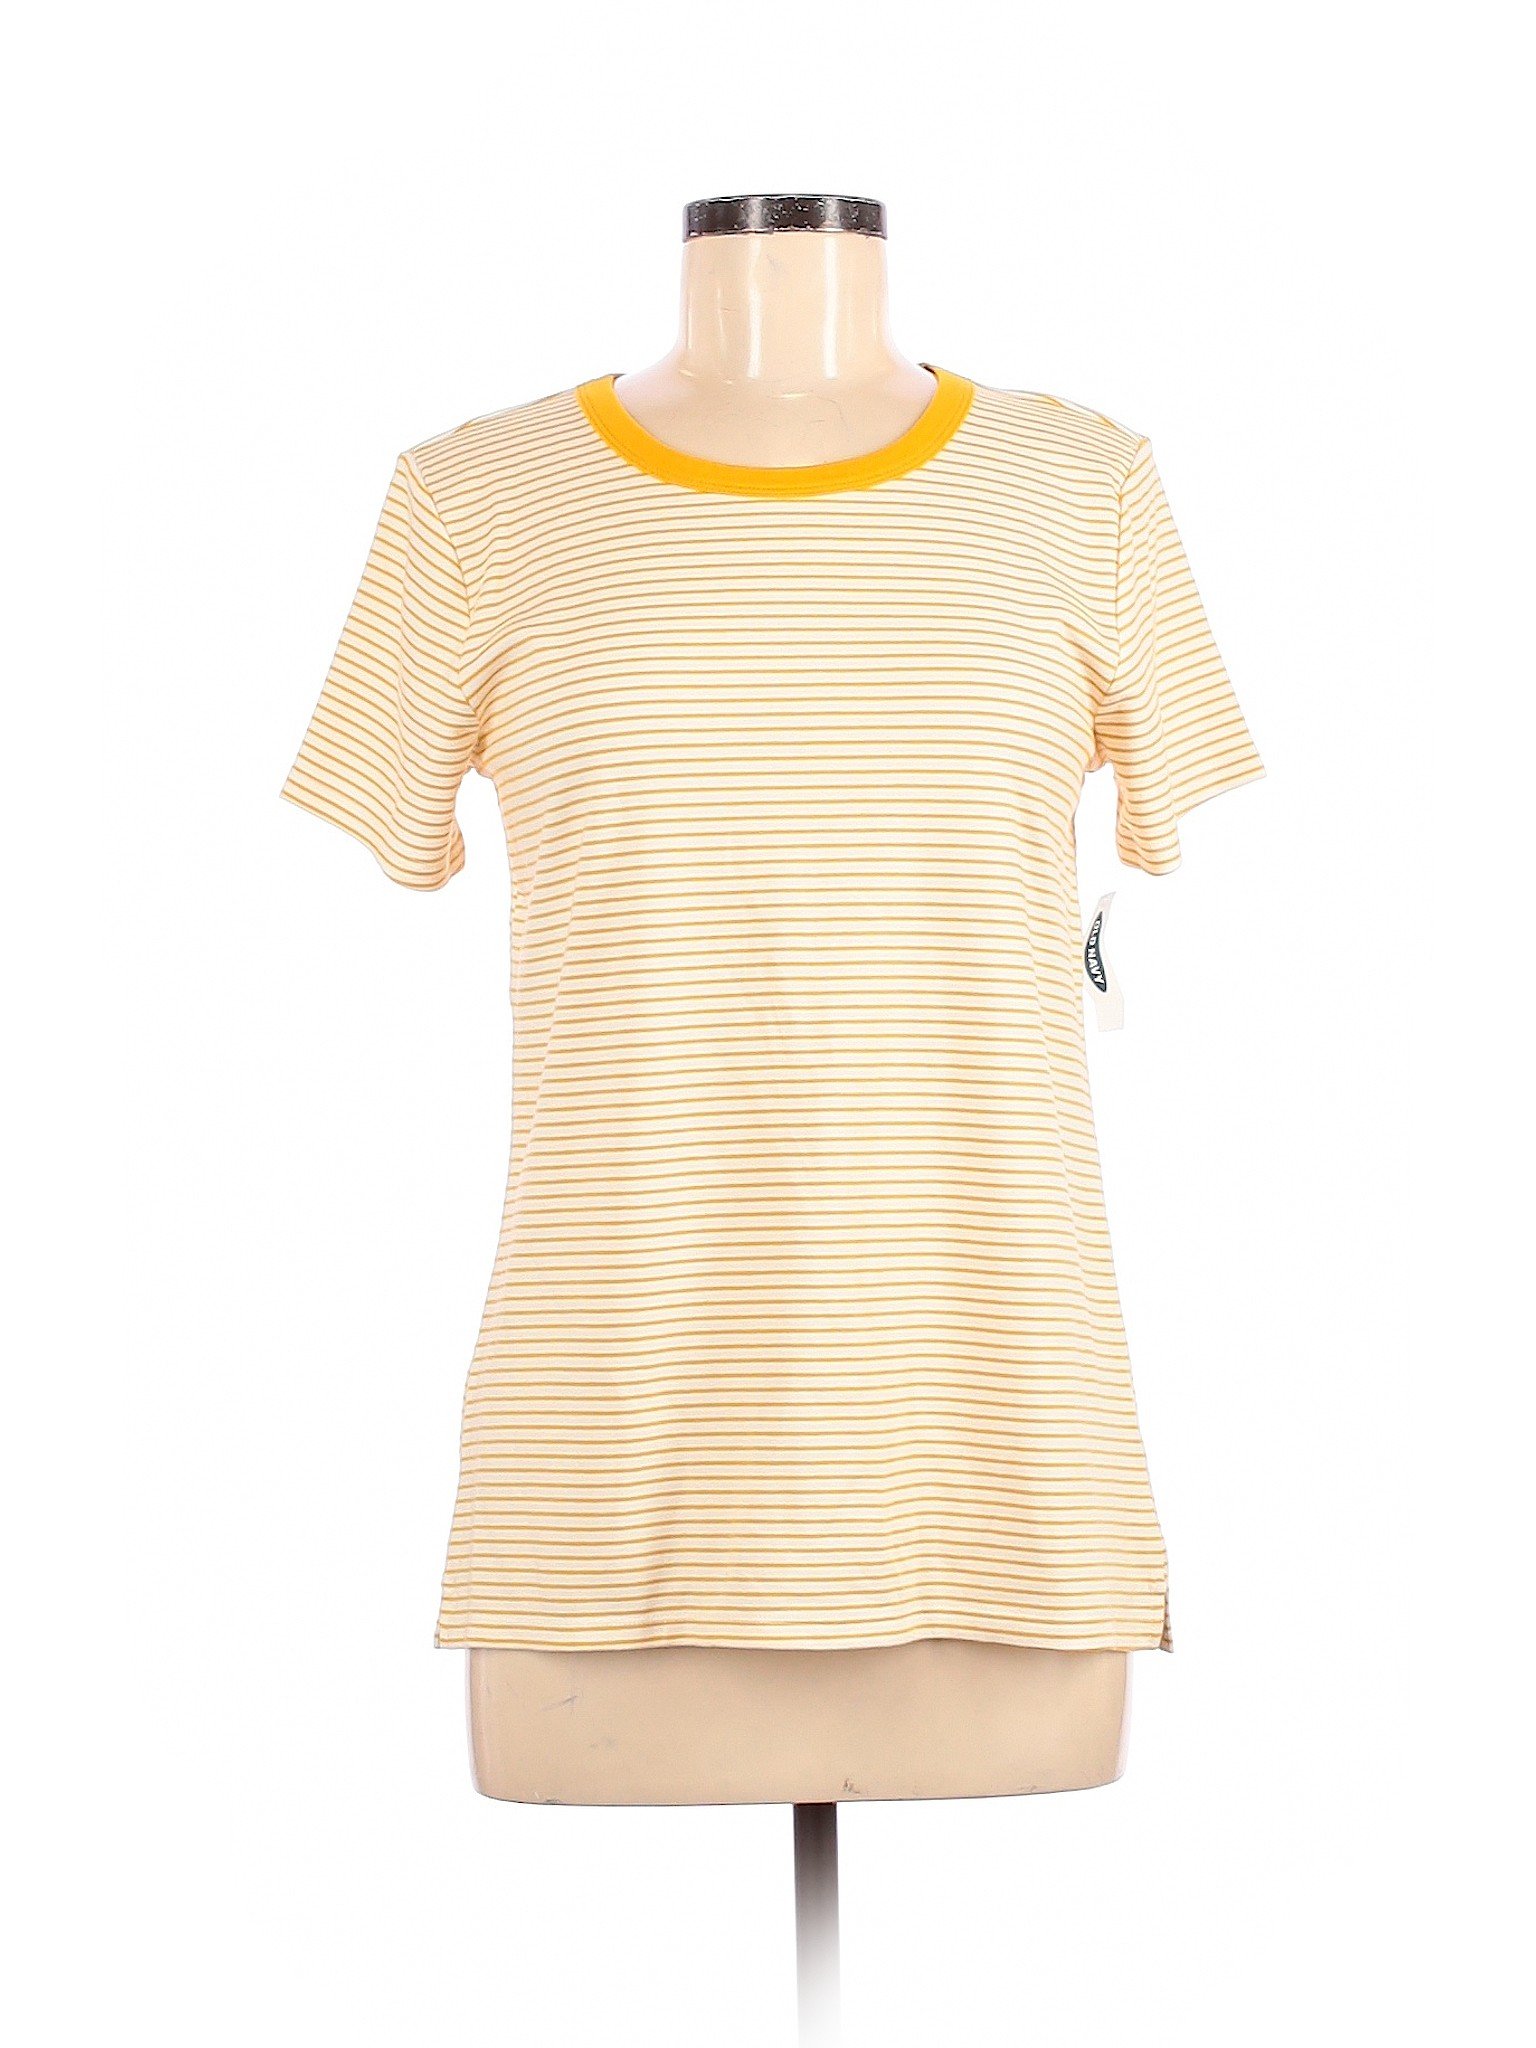 NWT Old Navy Women Yellow Short Sleeve T-Shirt L | eBay